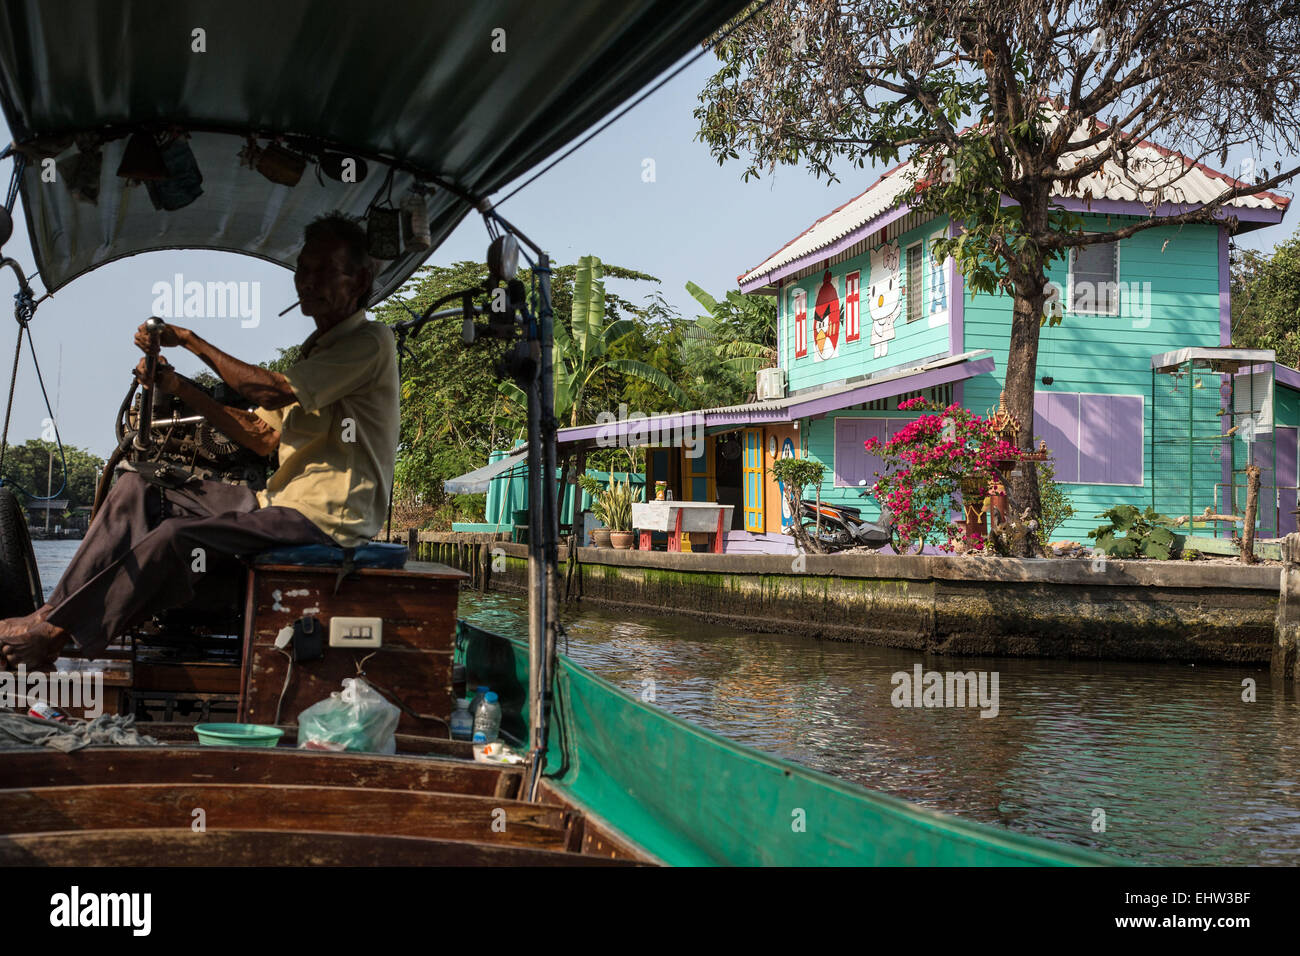 ILLUSTRATION OF BANGKOK, THAILAND, SOUTHEAST ASIA Stock Photo